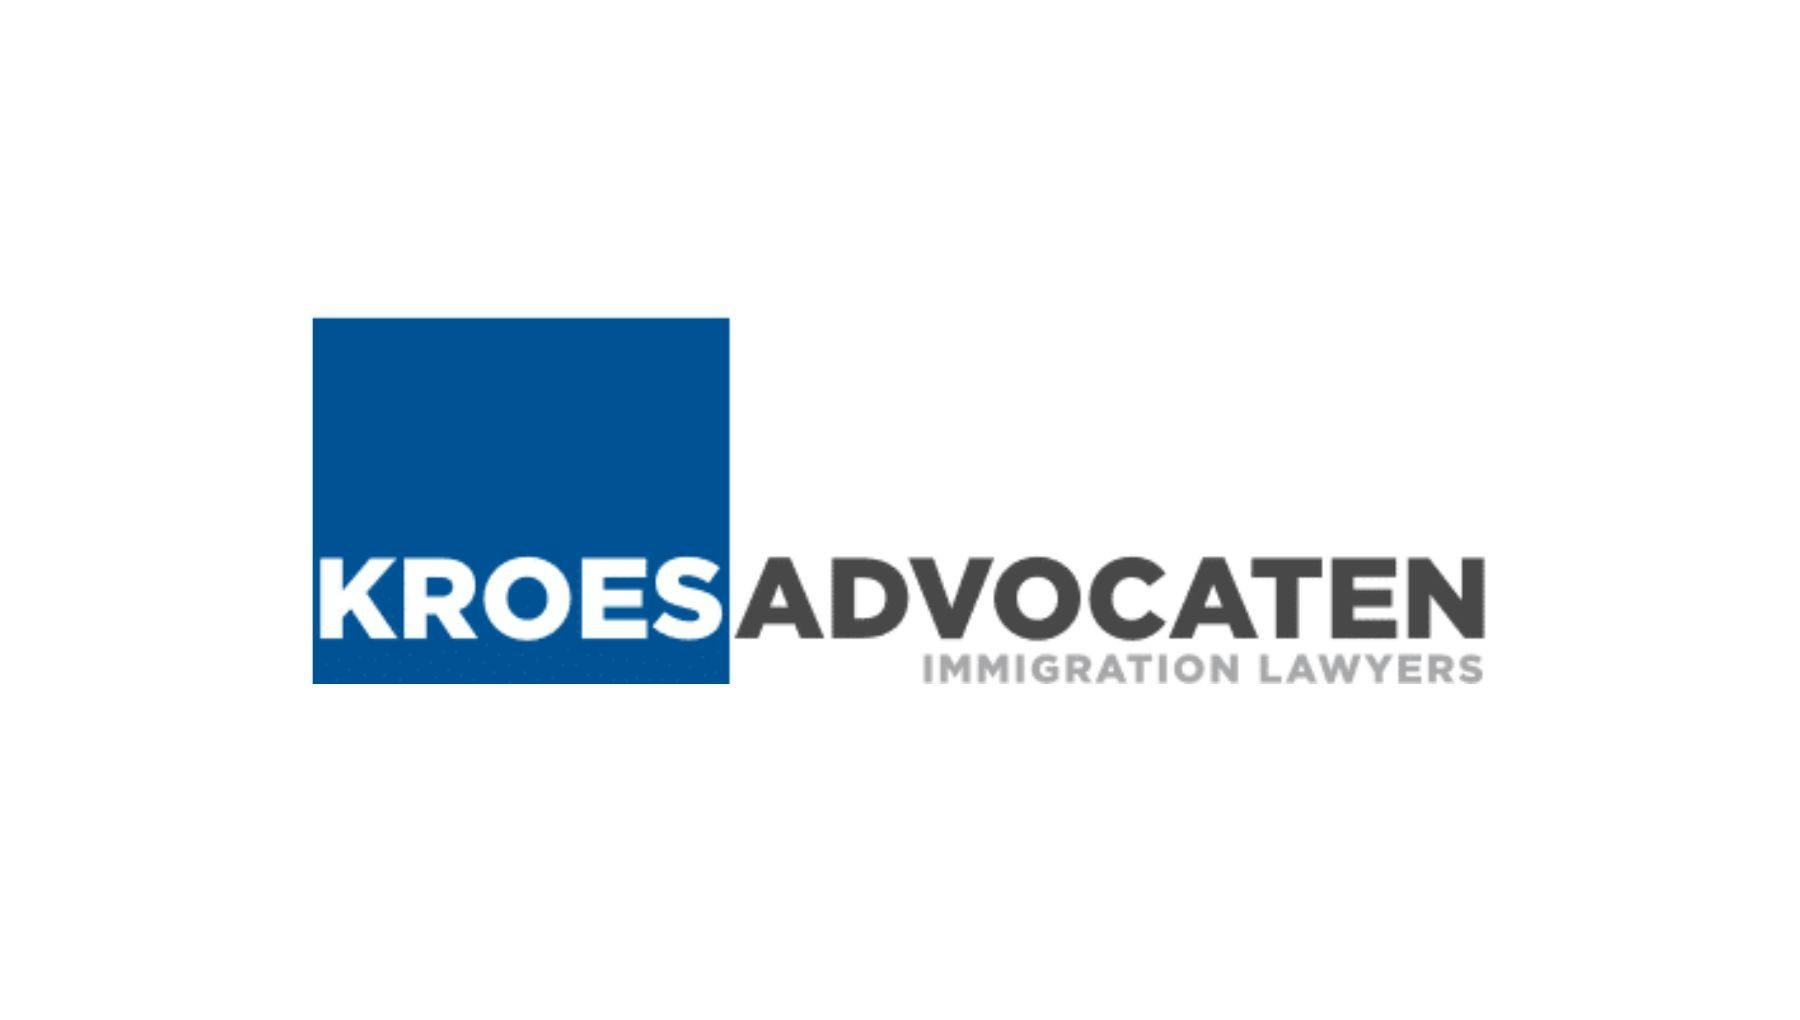 Kroes Advocaten Immigration Lawyers